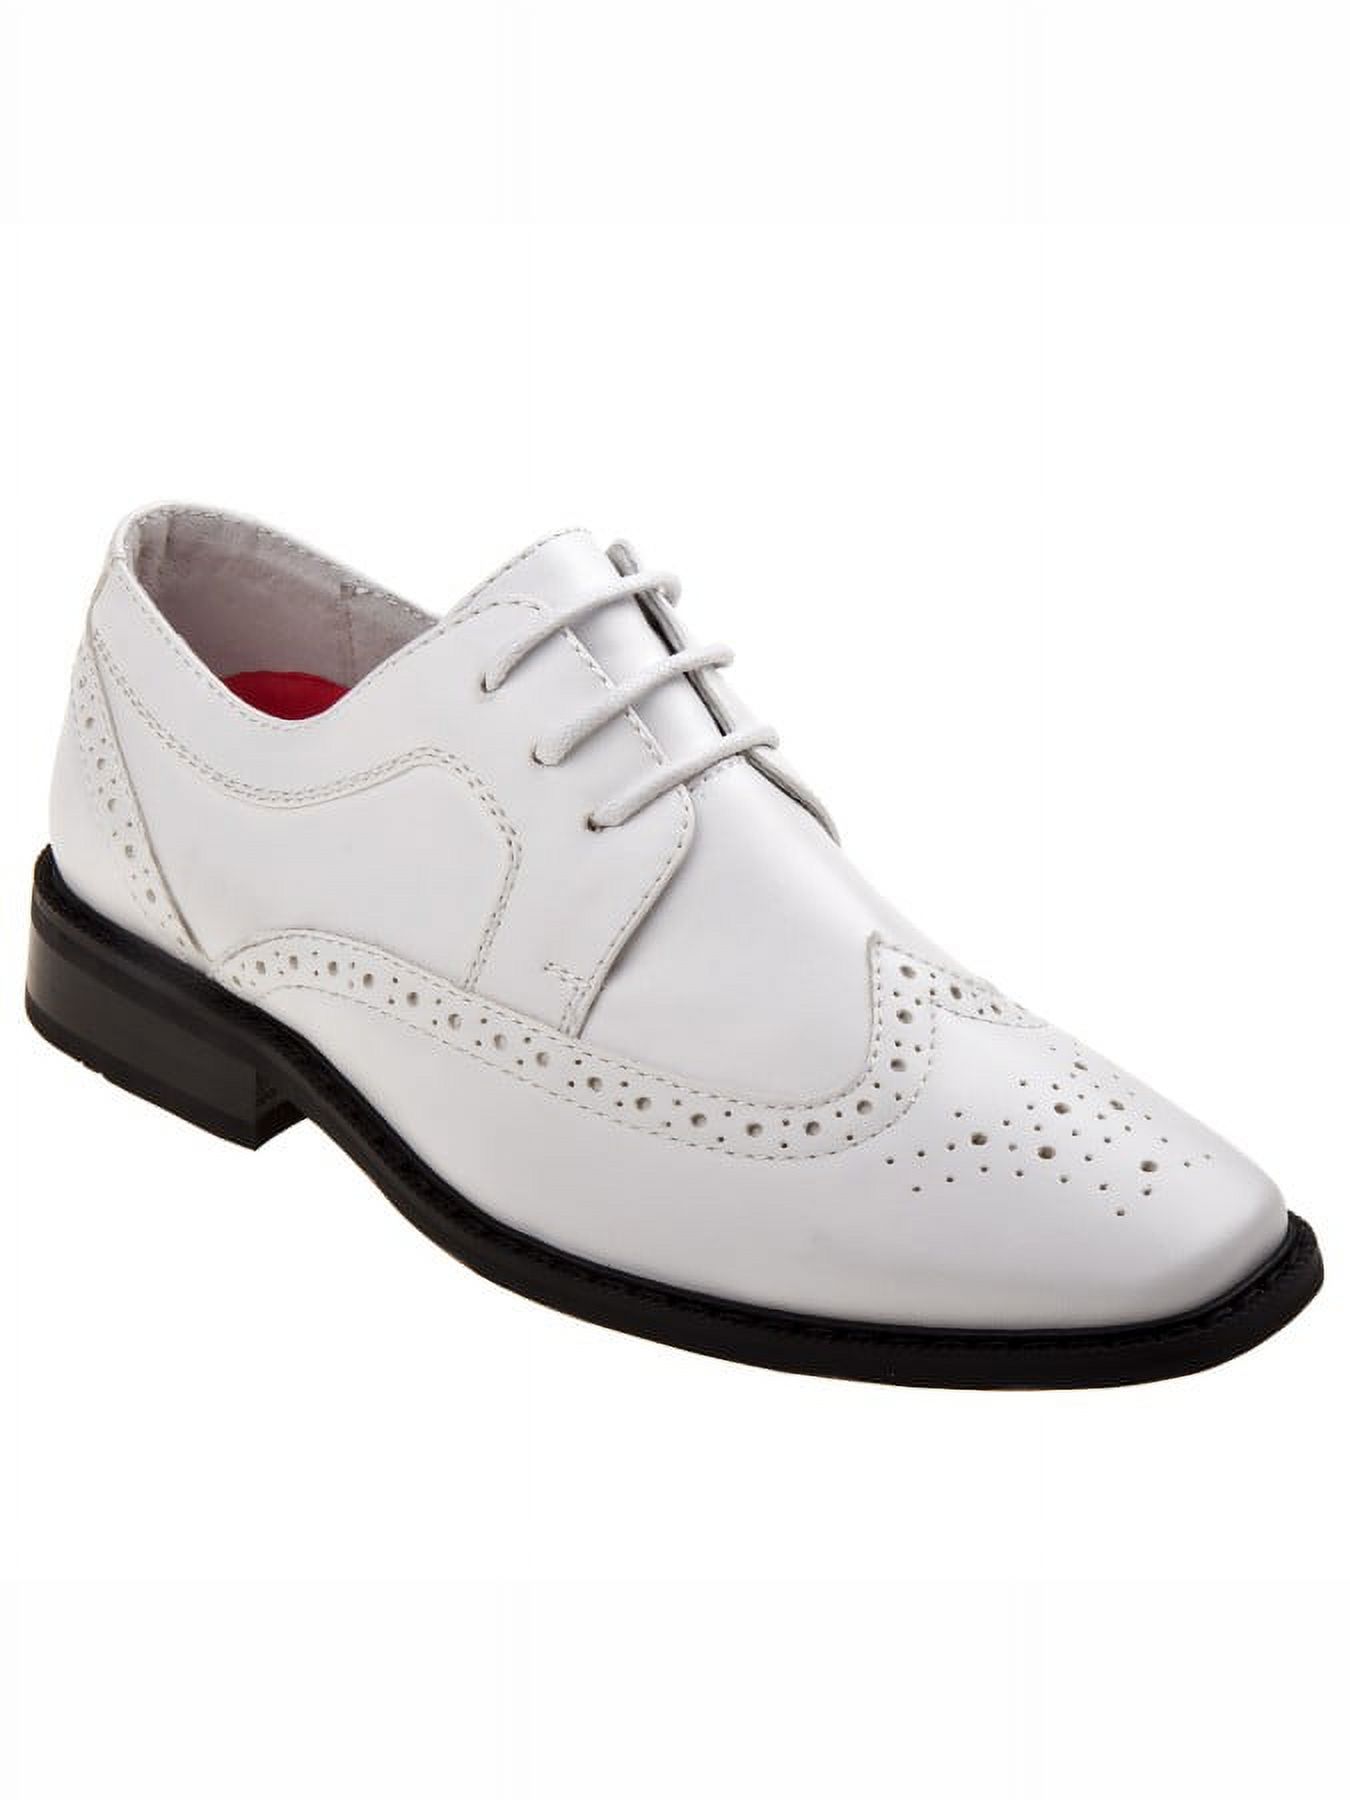 Joseph Allen Boys Lace Toddler Dress Shoes - White, 12 - image 1 of 5